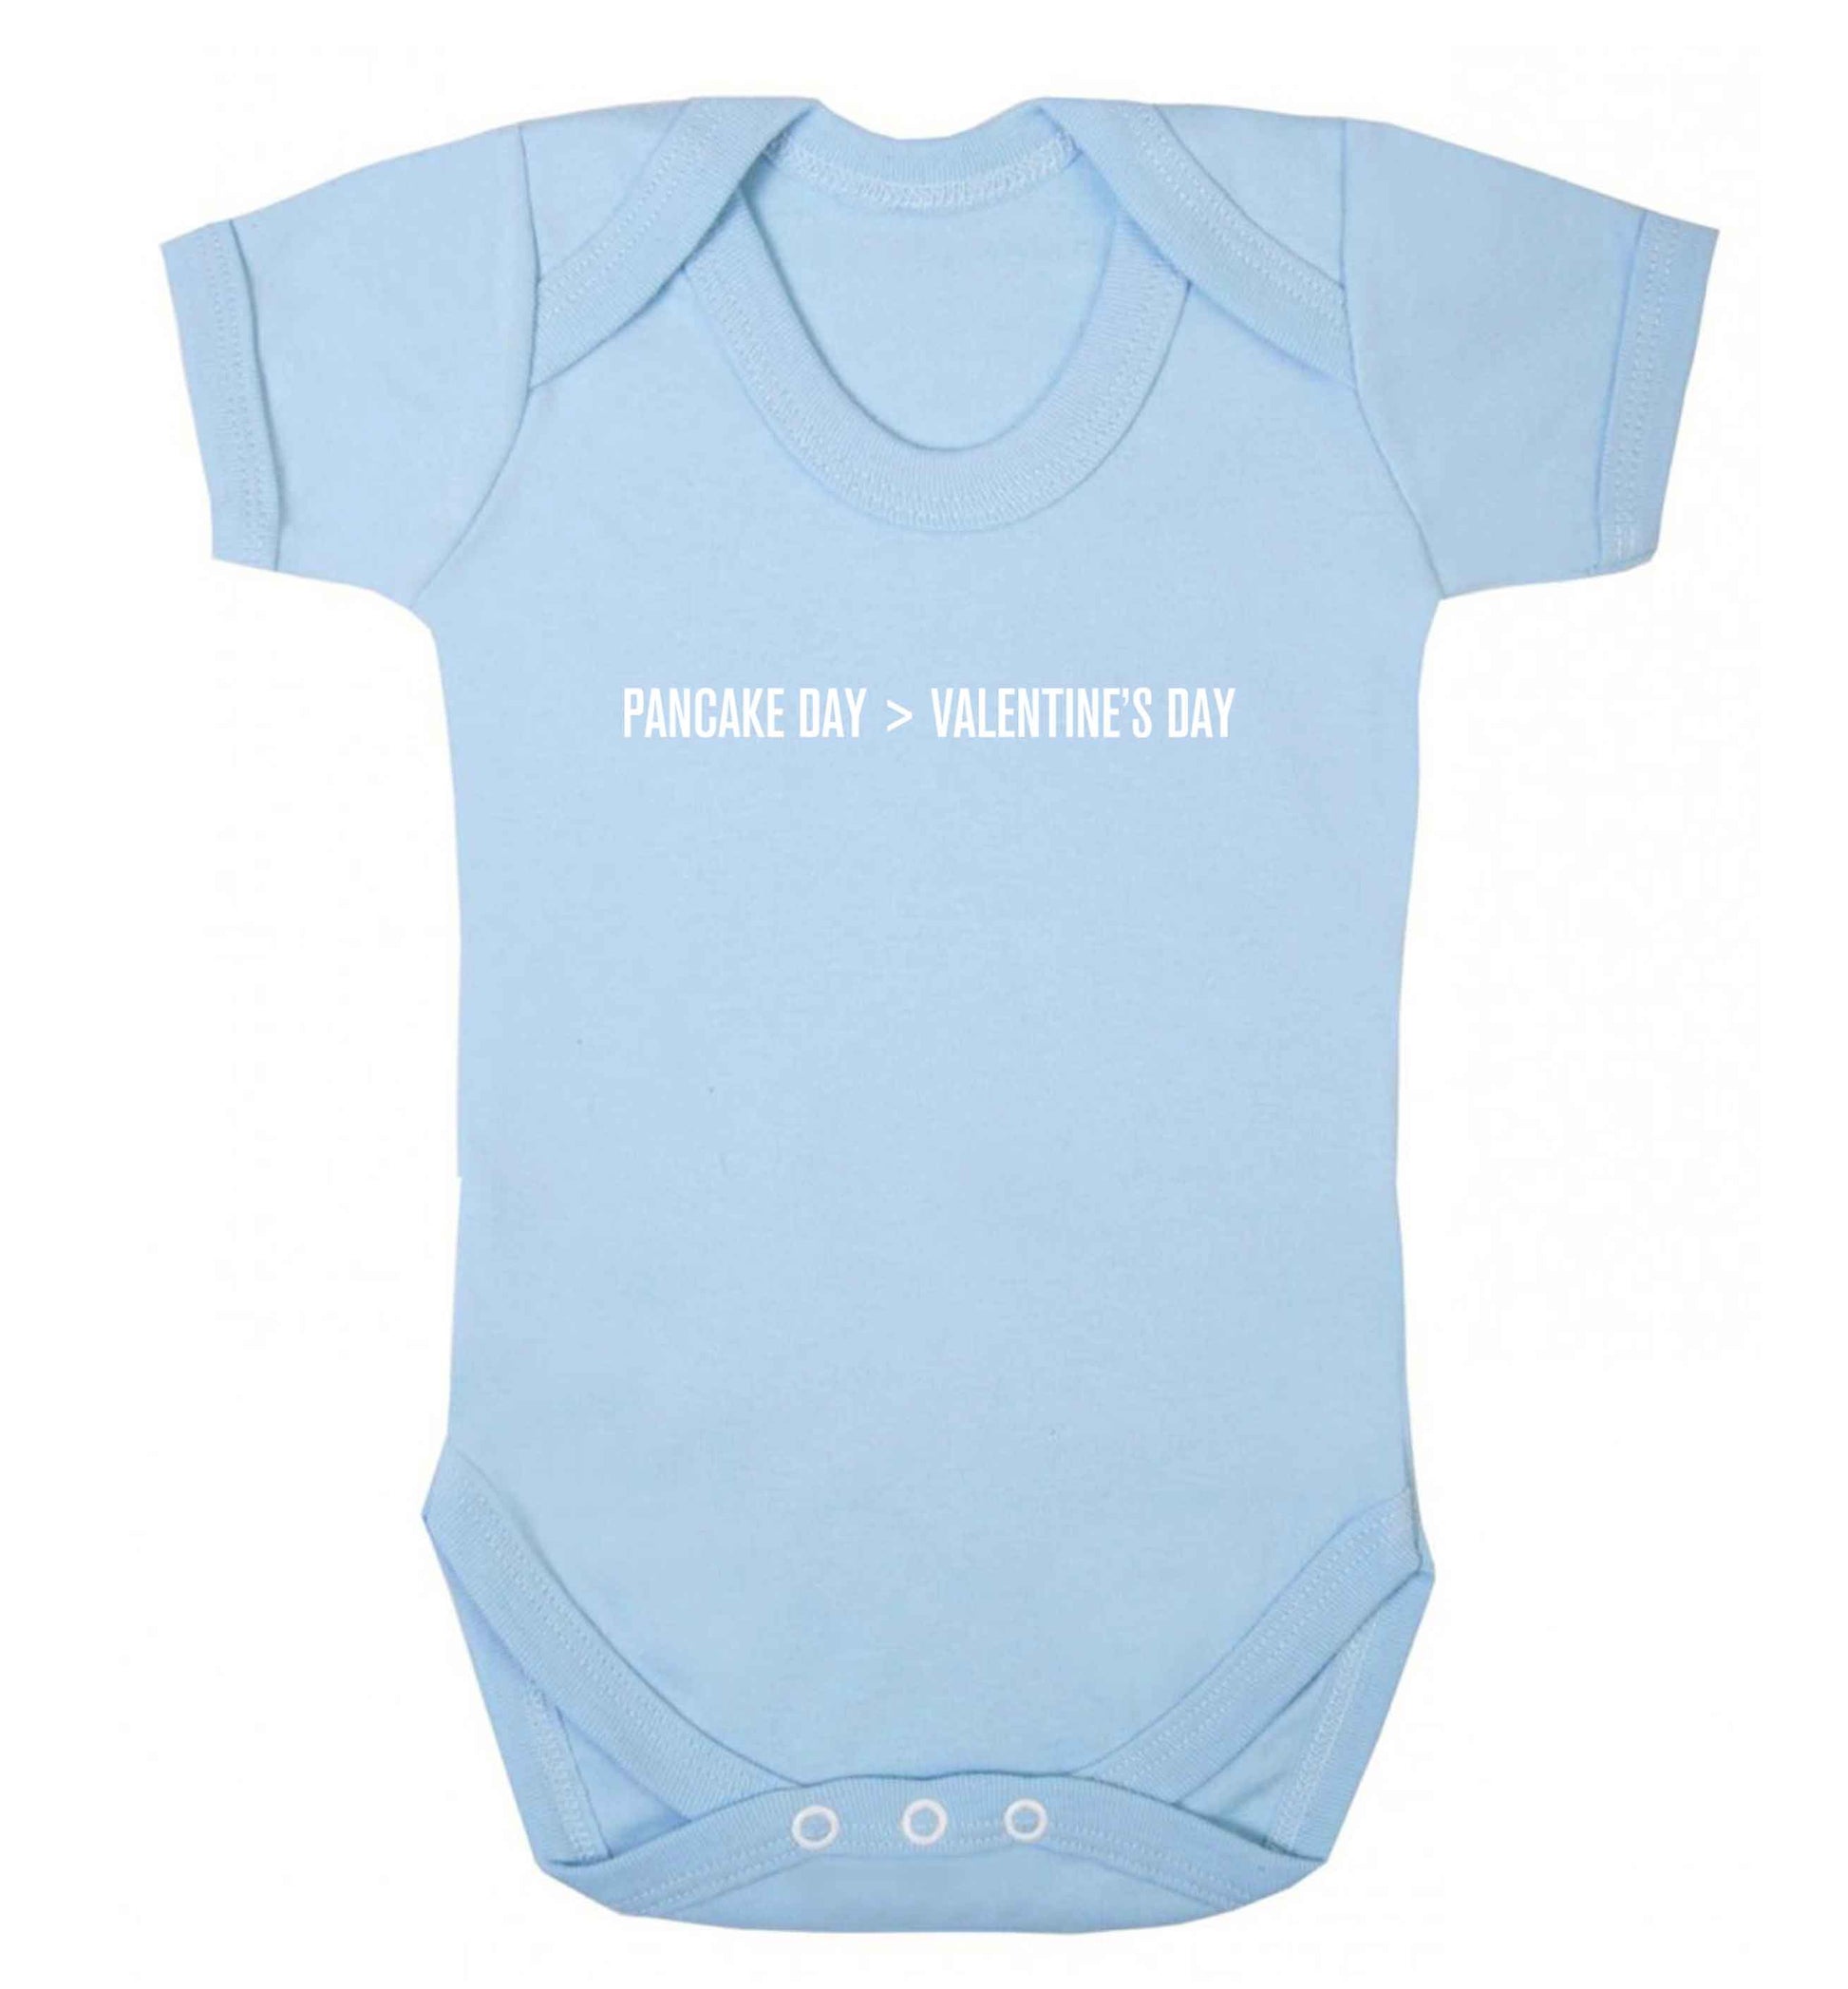 Pancake day > valentines day baby vest pale blue 18-24 months